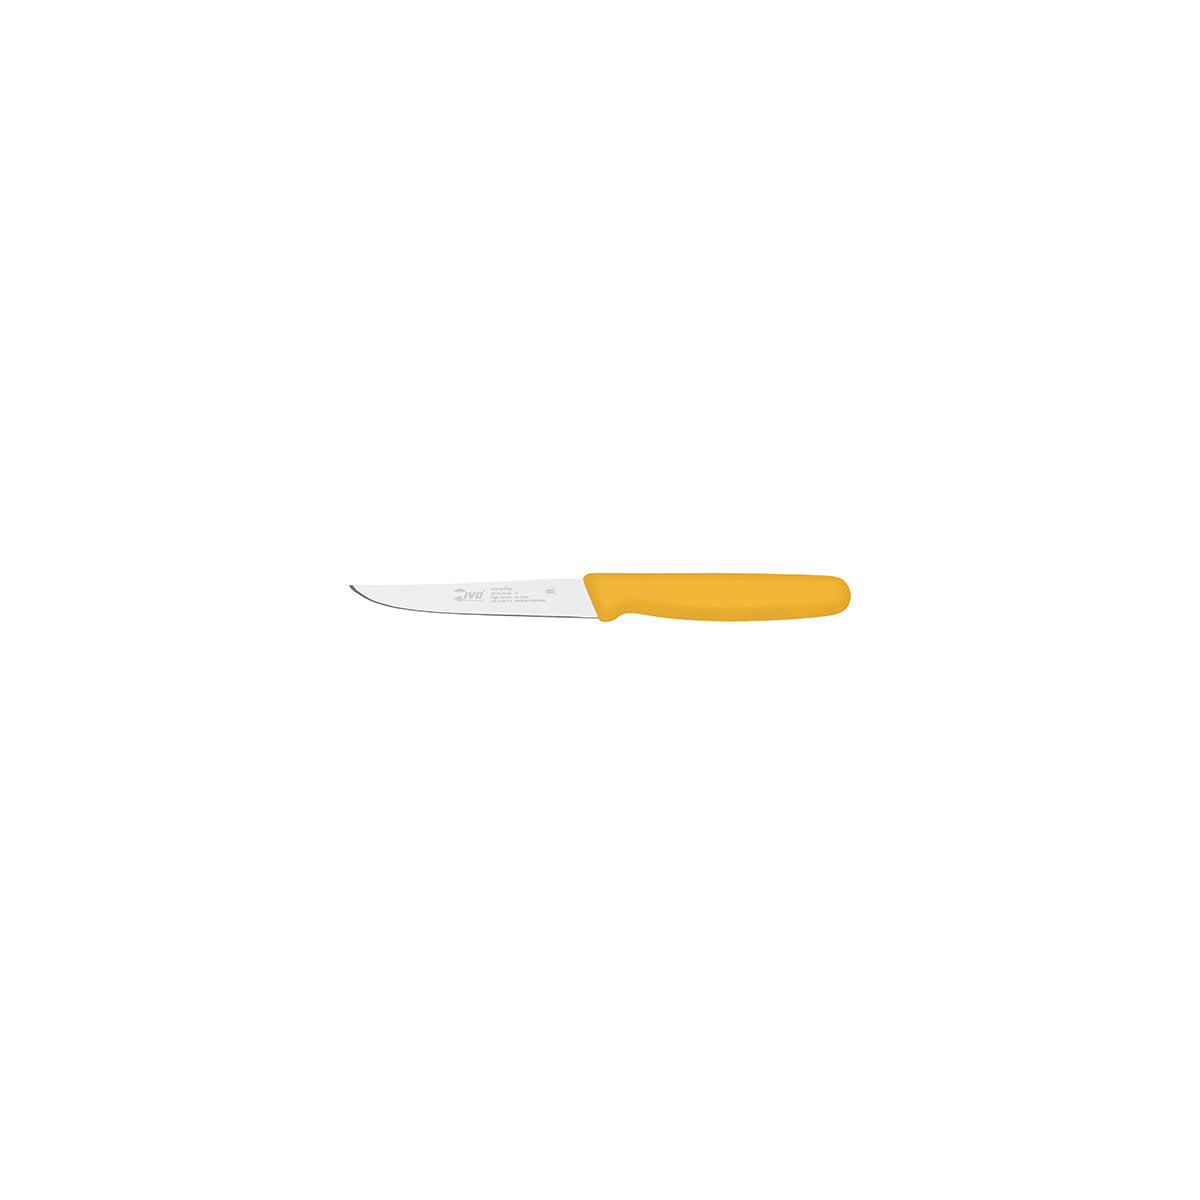 25491 Ivo Professional Line I Paring Knife Yellow 100mm Tomkin Australia Hospitality Supplies